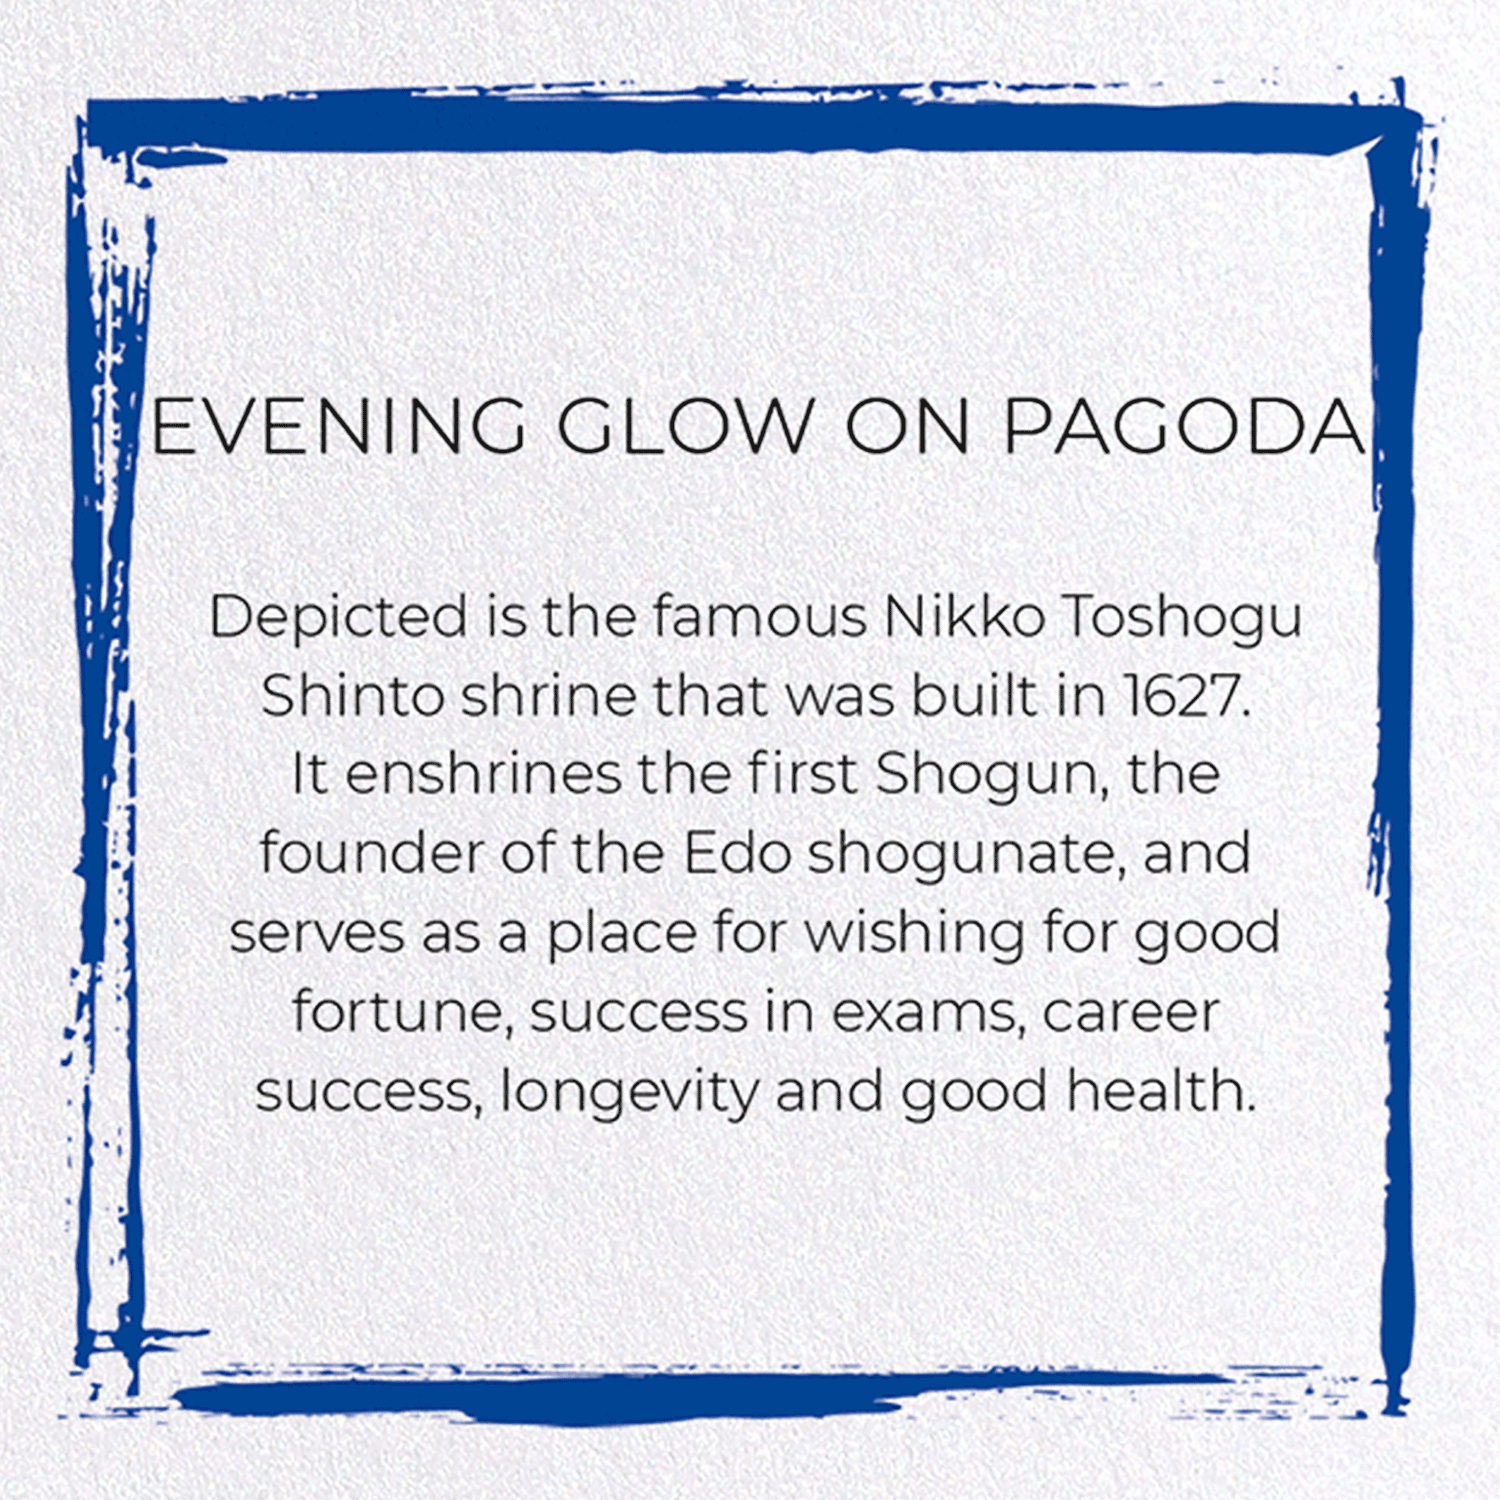 EVENING GLOW ON PAGODA